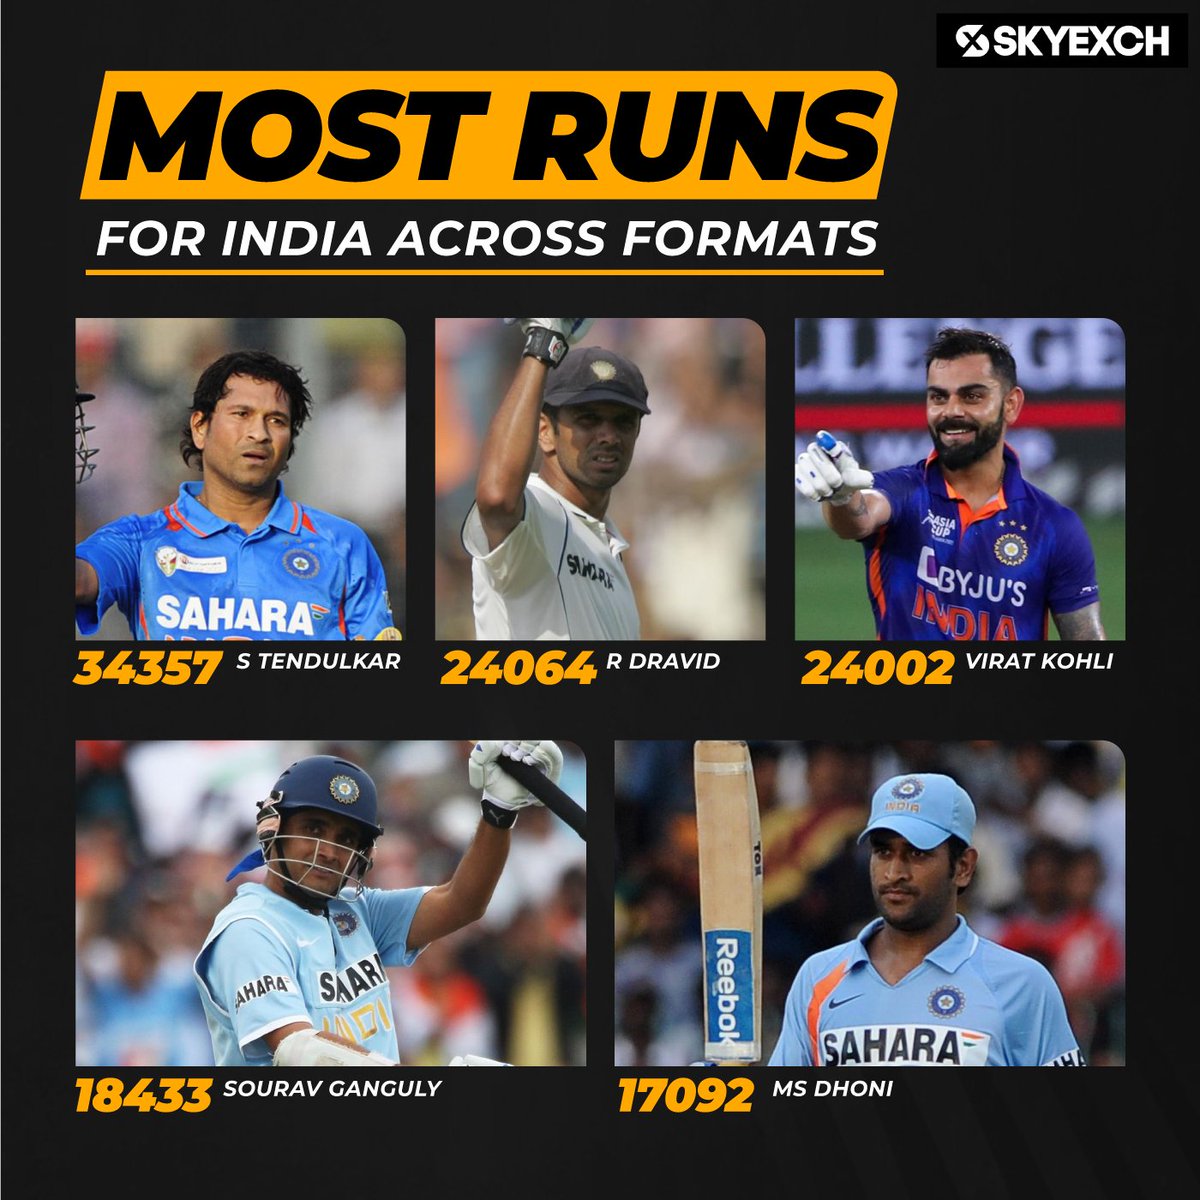 Here is the most runs scored by Indian cricketers across format.

#StuartBinny #LegendsLeagueCricket #BossLogoKaGame #BhilwaraGroup #SkyExchCricket #SkyExchSport #T20Cricket #SachinTendulkar #SouthAfricaLegends #IndiaLegends #skyexch